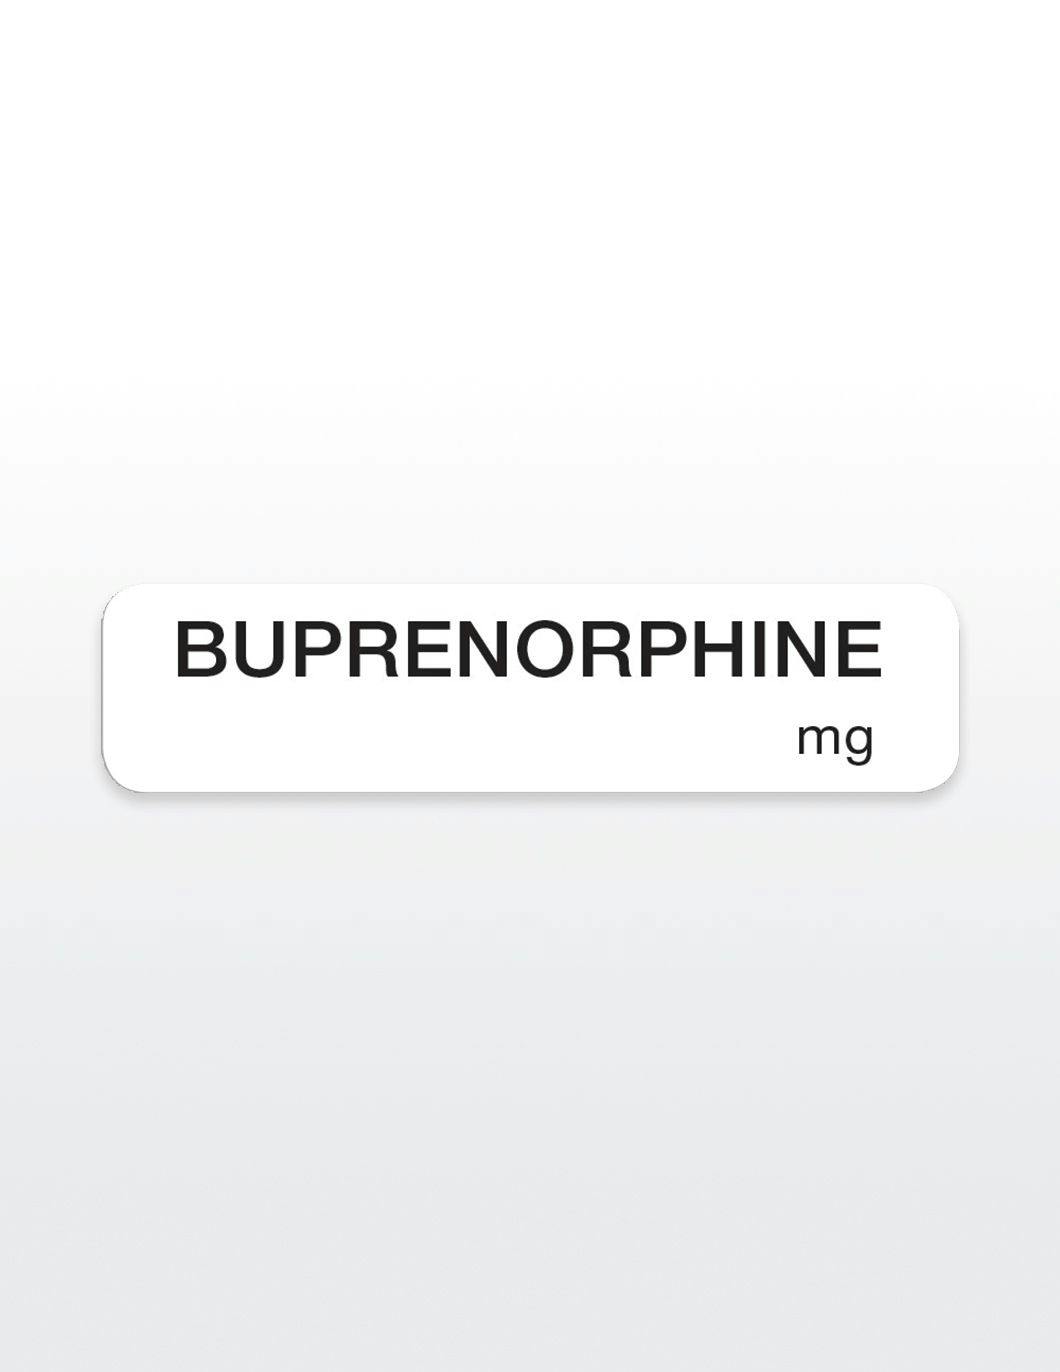 buprenorphine-drug-syringe-stickers 